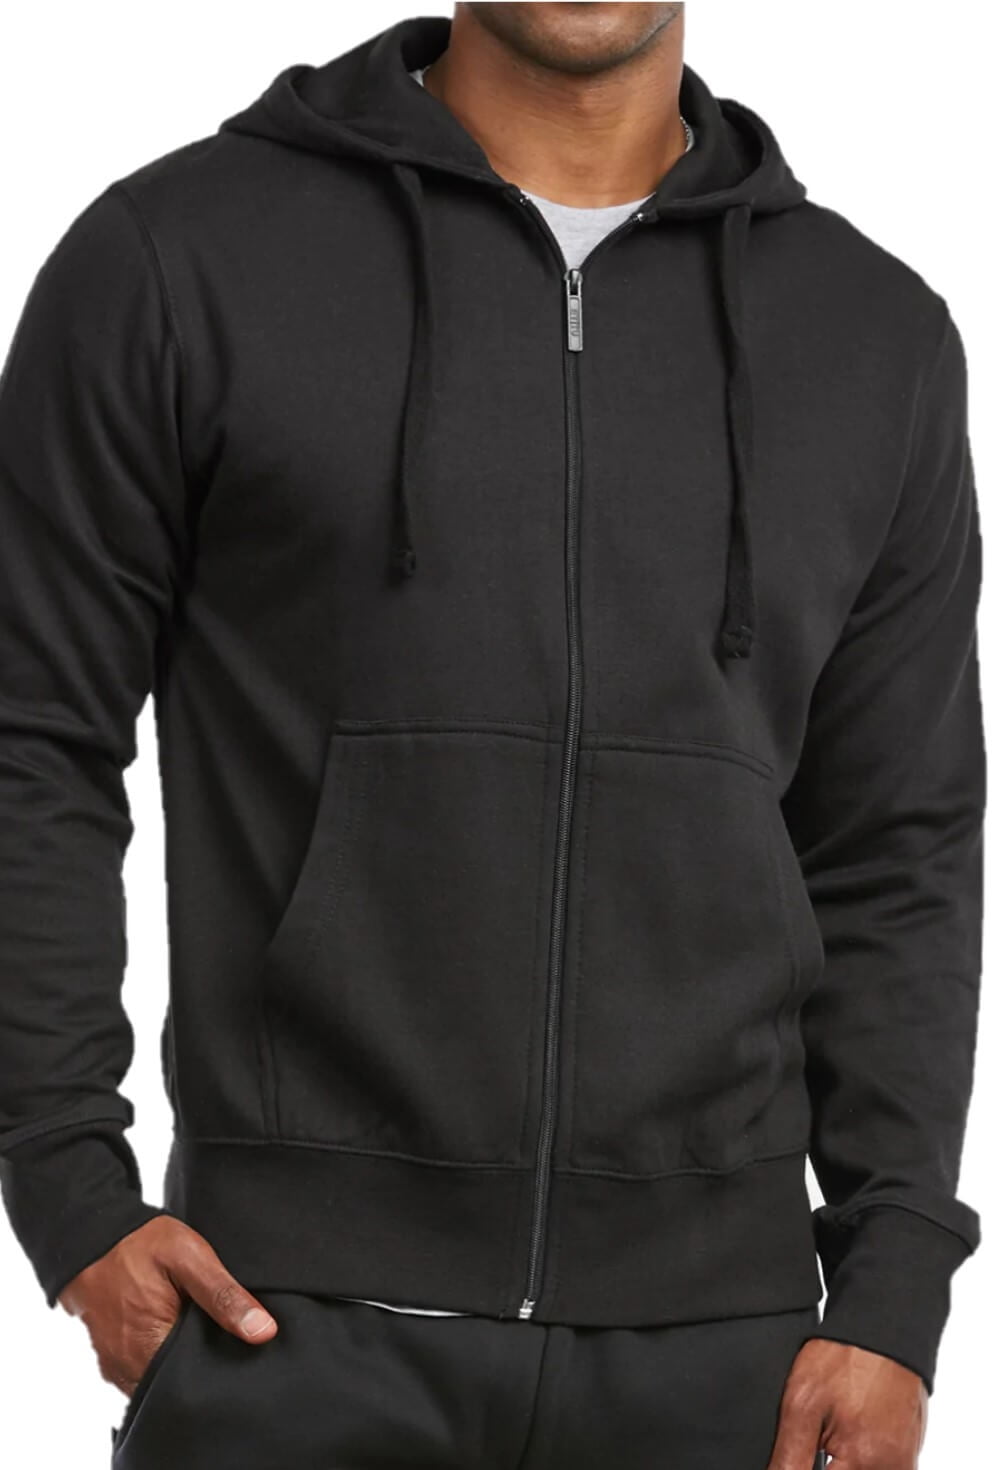 Men's Cotton Blend Lightweight Fleece Lined Sport Gym Zip Up Sweater  Hoodie, Black L, 1 Count, 1 Pack